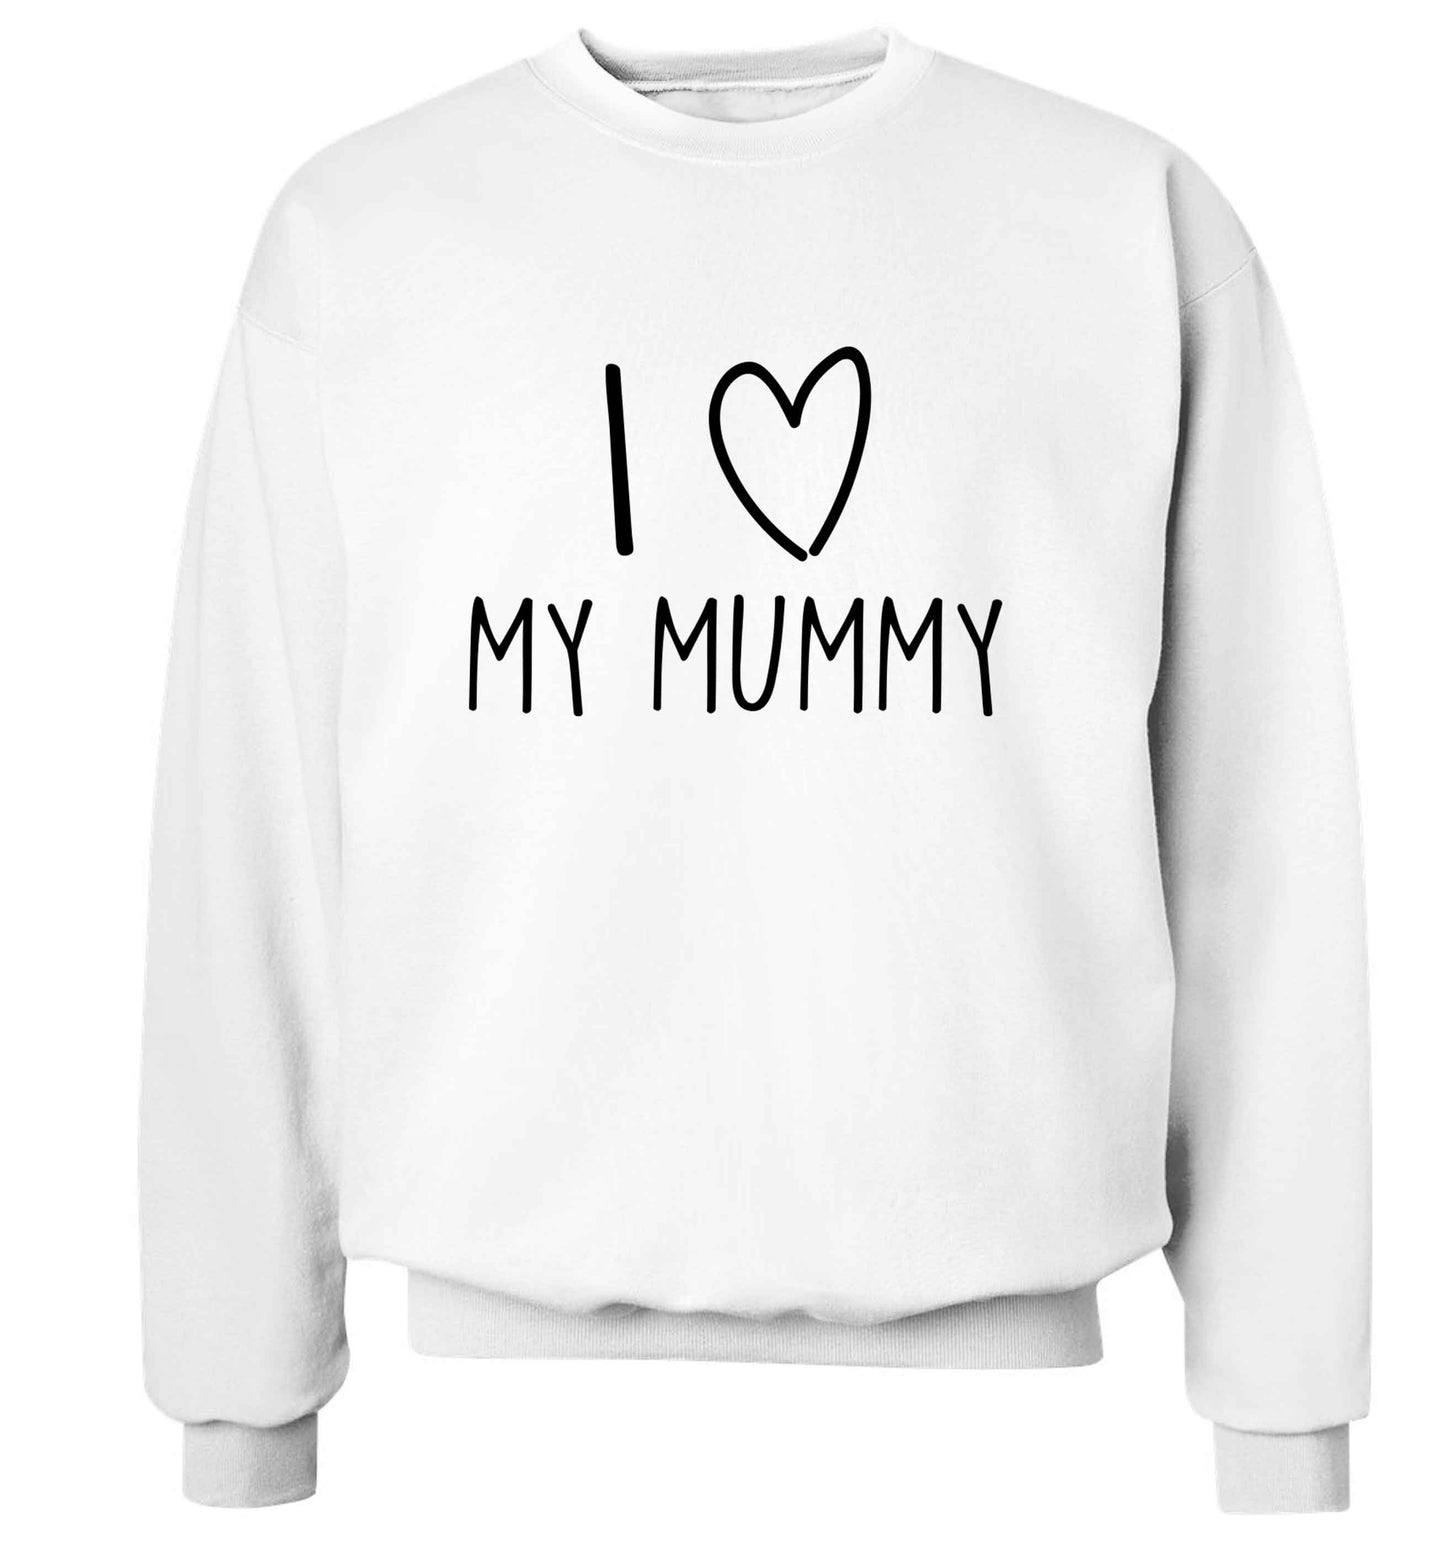 I love my mummy adult's unisex white sweater 2XL